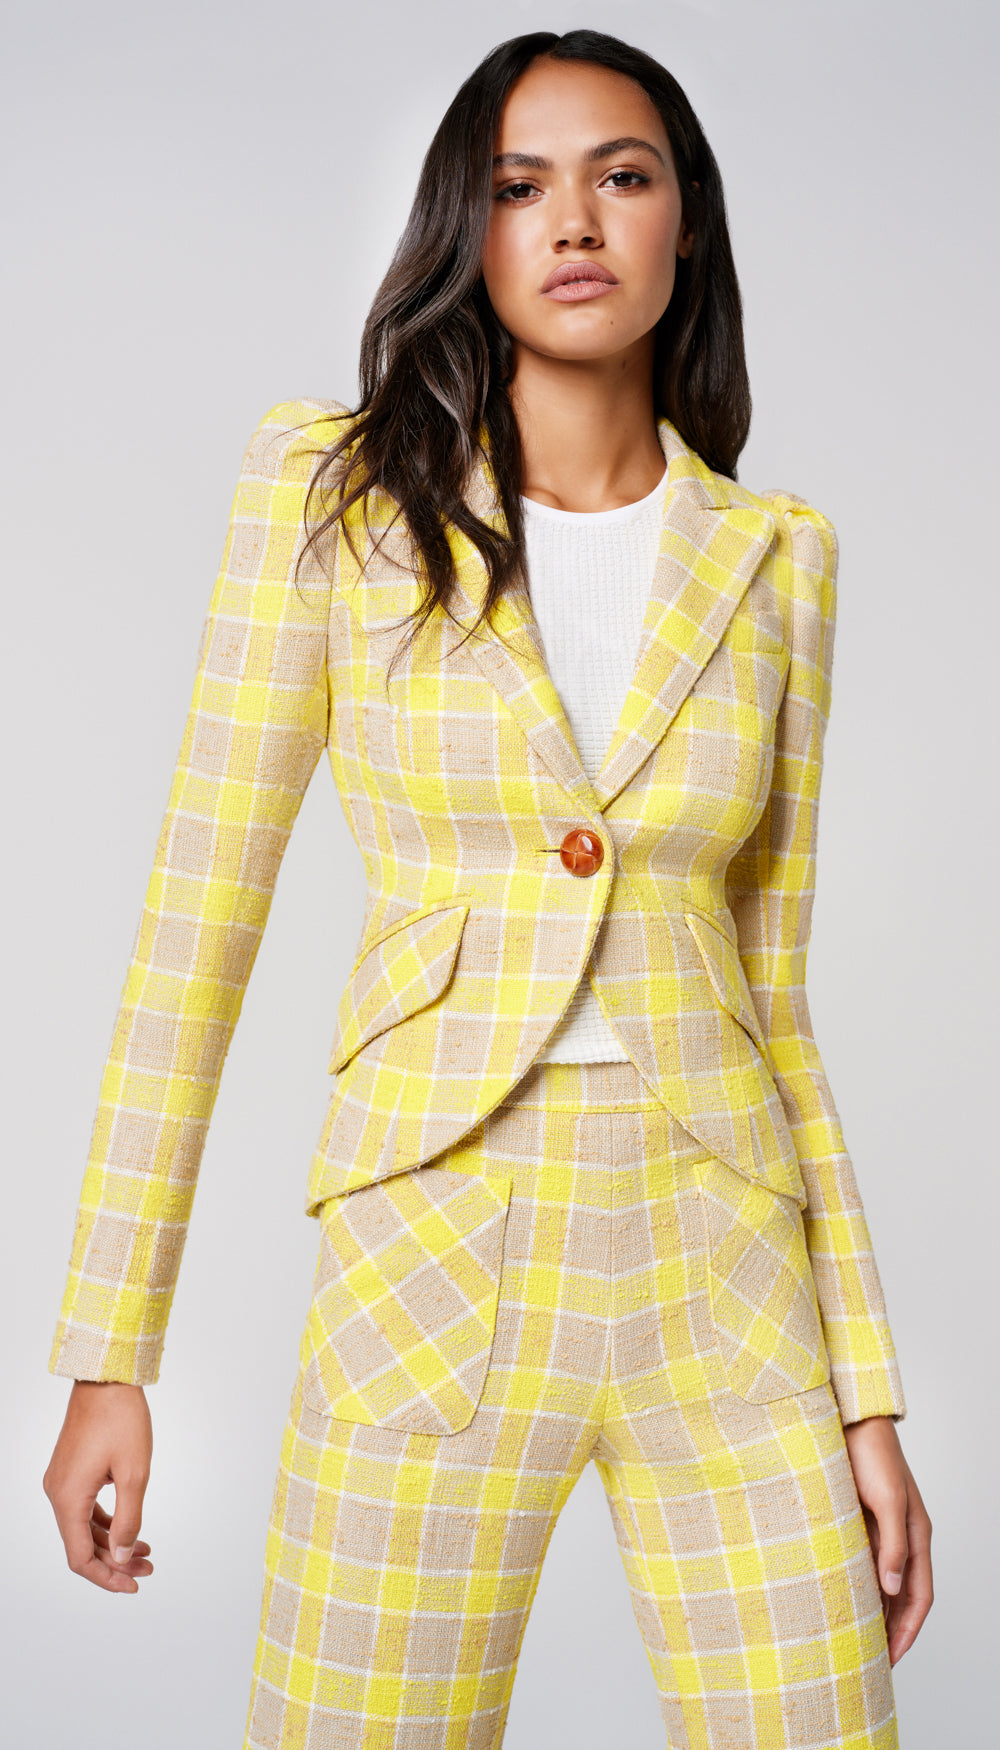 A woman in a yellow check blazer.